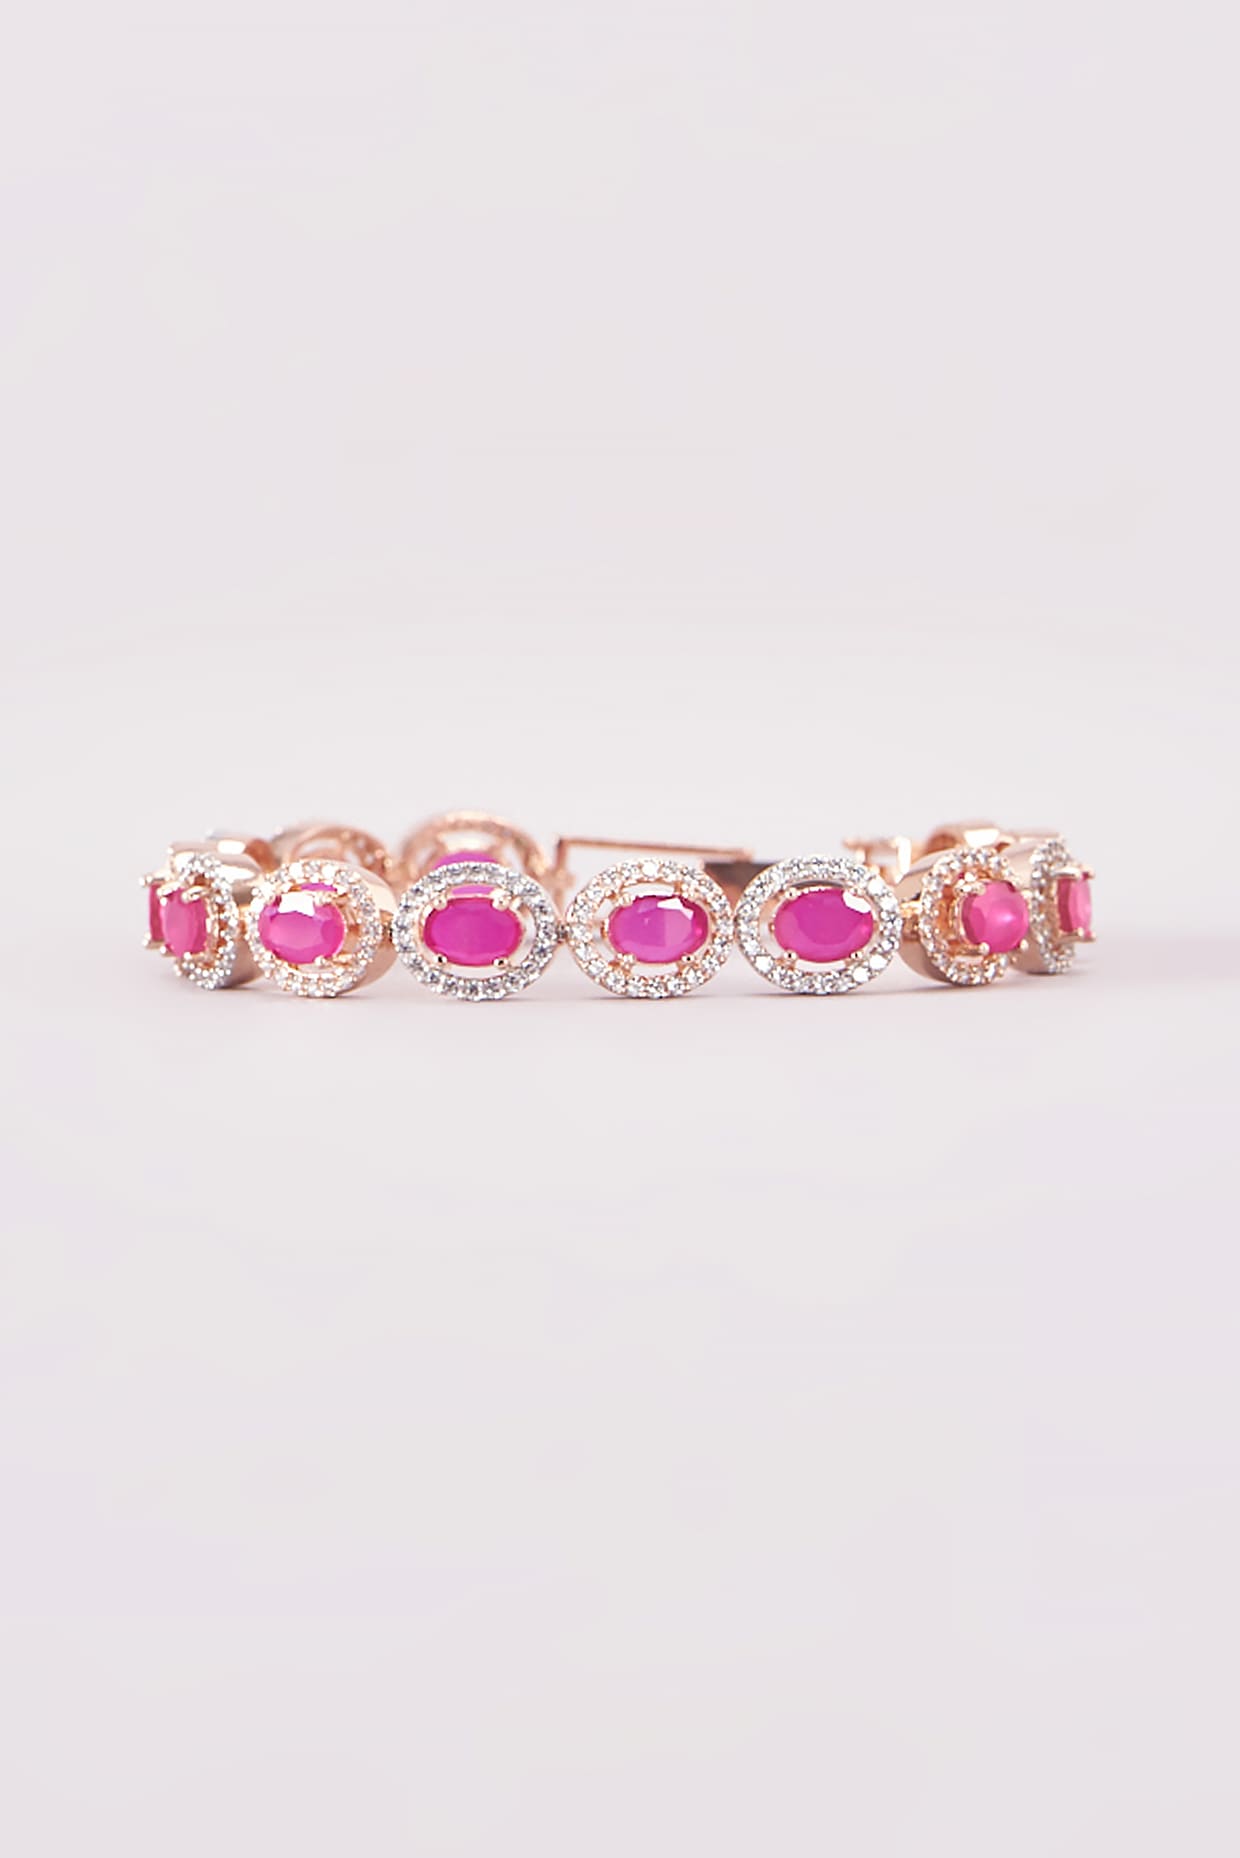 Rose Quartz Love & Attraction Bracelet NATURAL PINK ROSE QUARTZ CRYSTAL  BRACELET,BRACELET FOR MAN,BRACELET